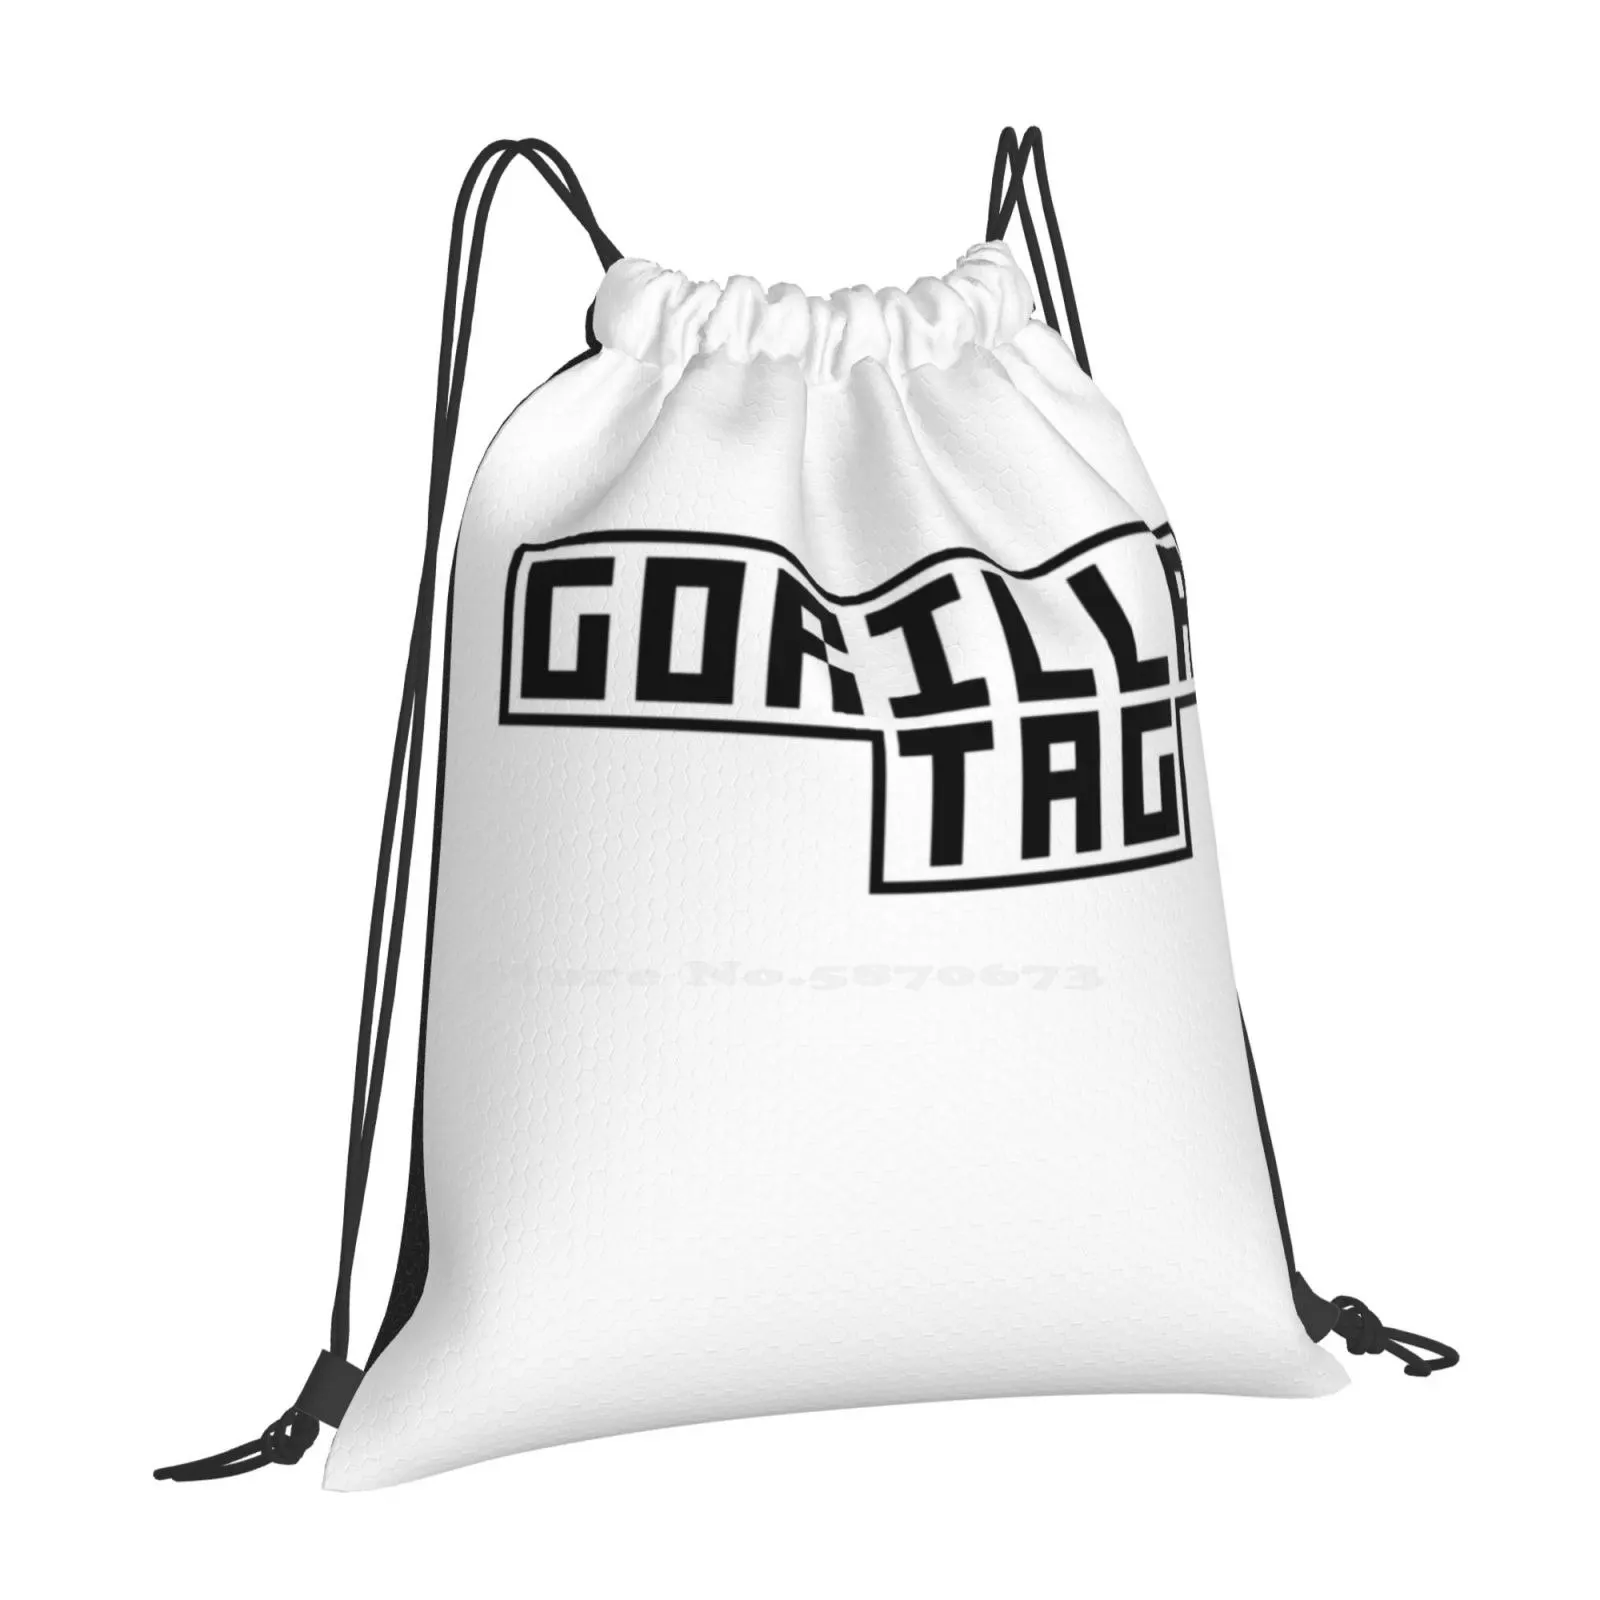 Gorilla Tag Pattern Design Bagpack School Bags Vr Monkey Gorilla